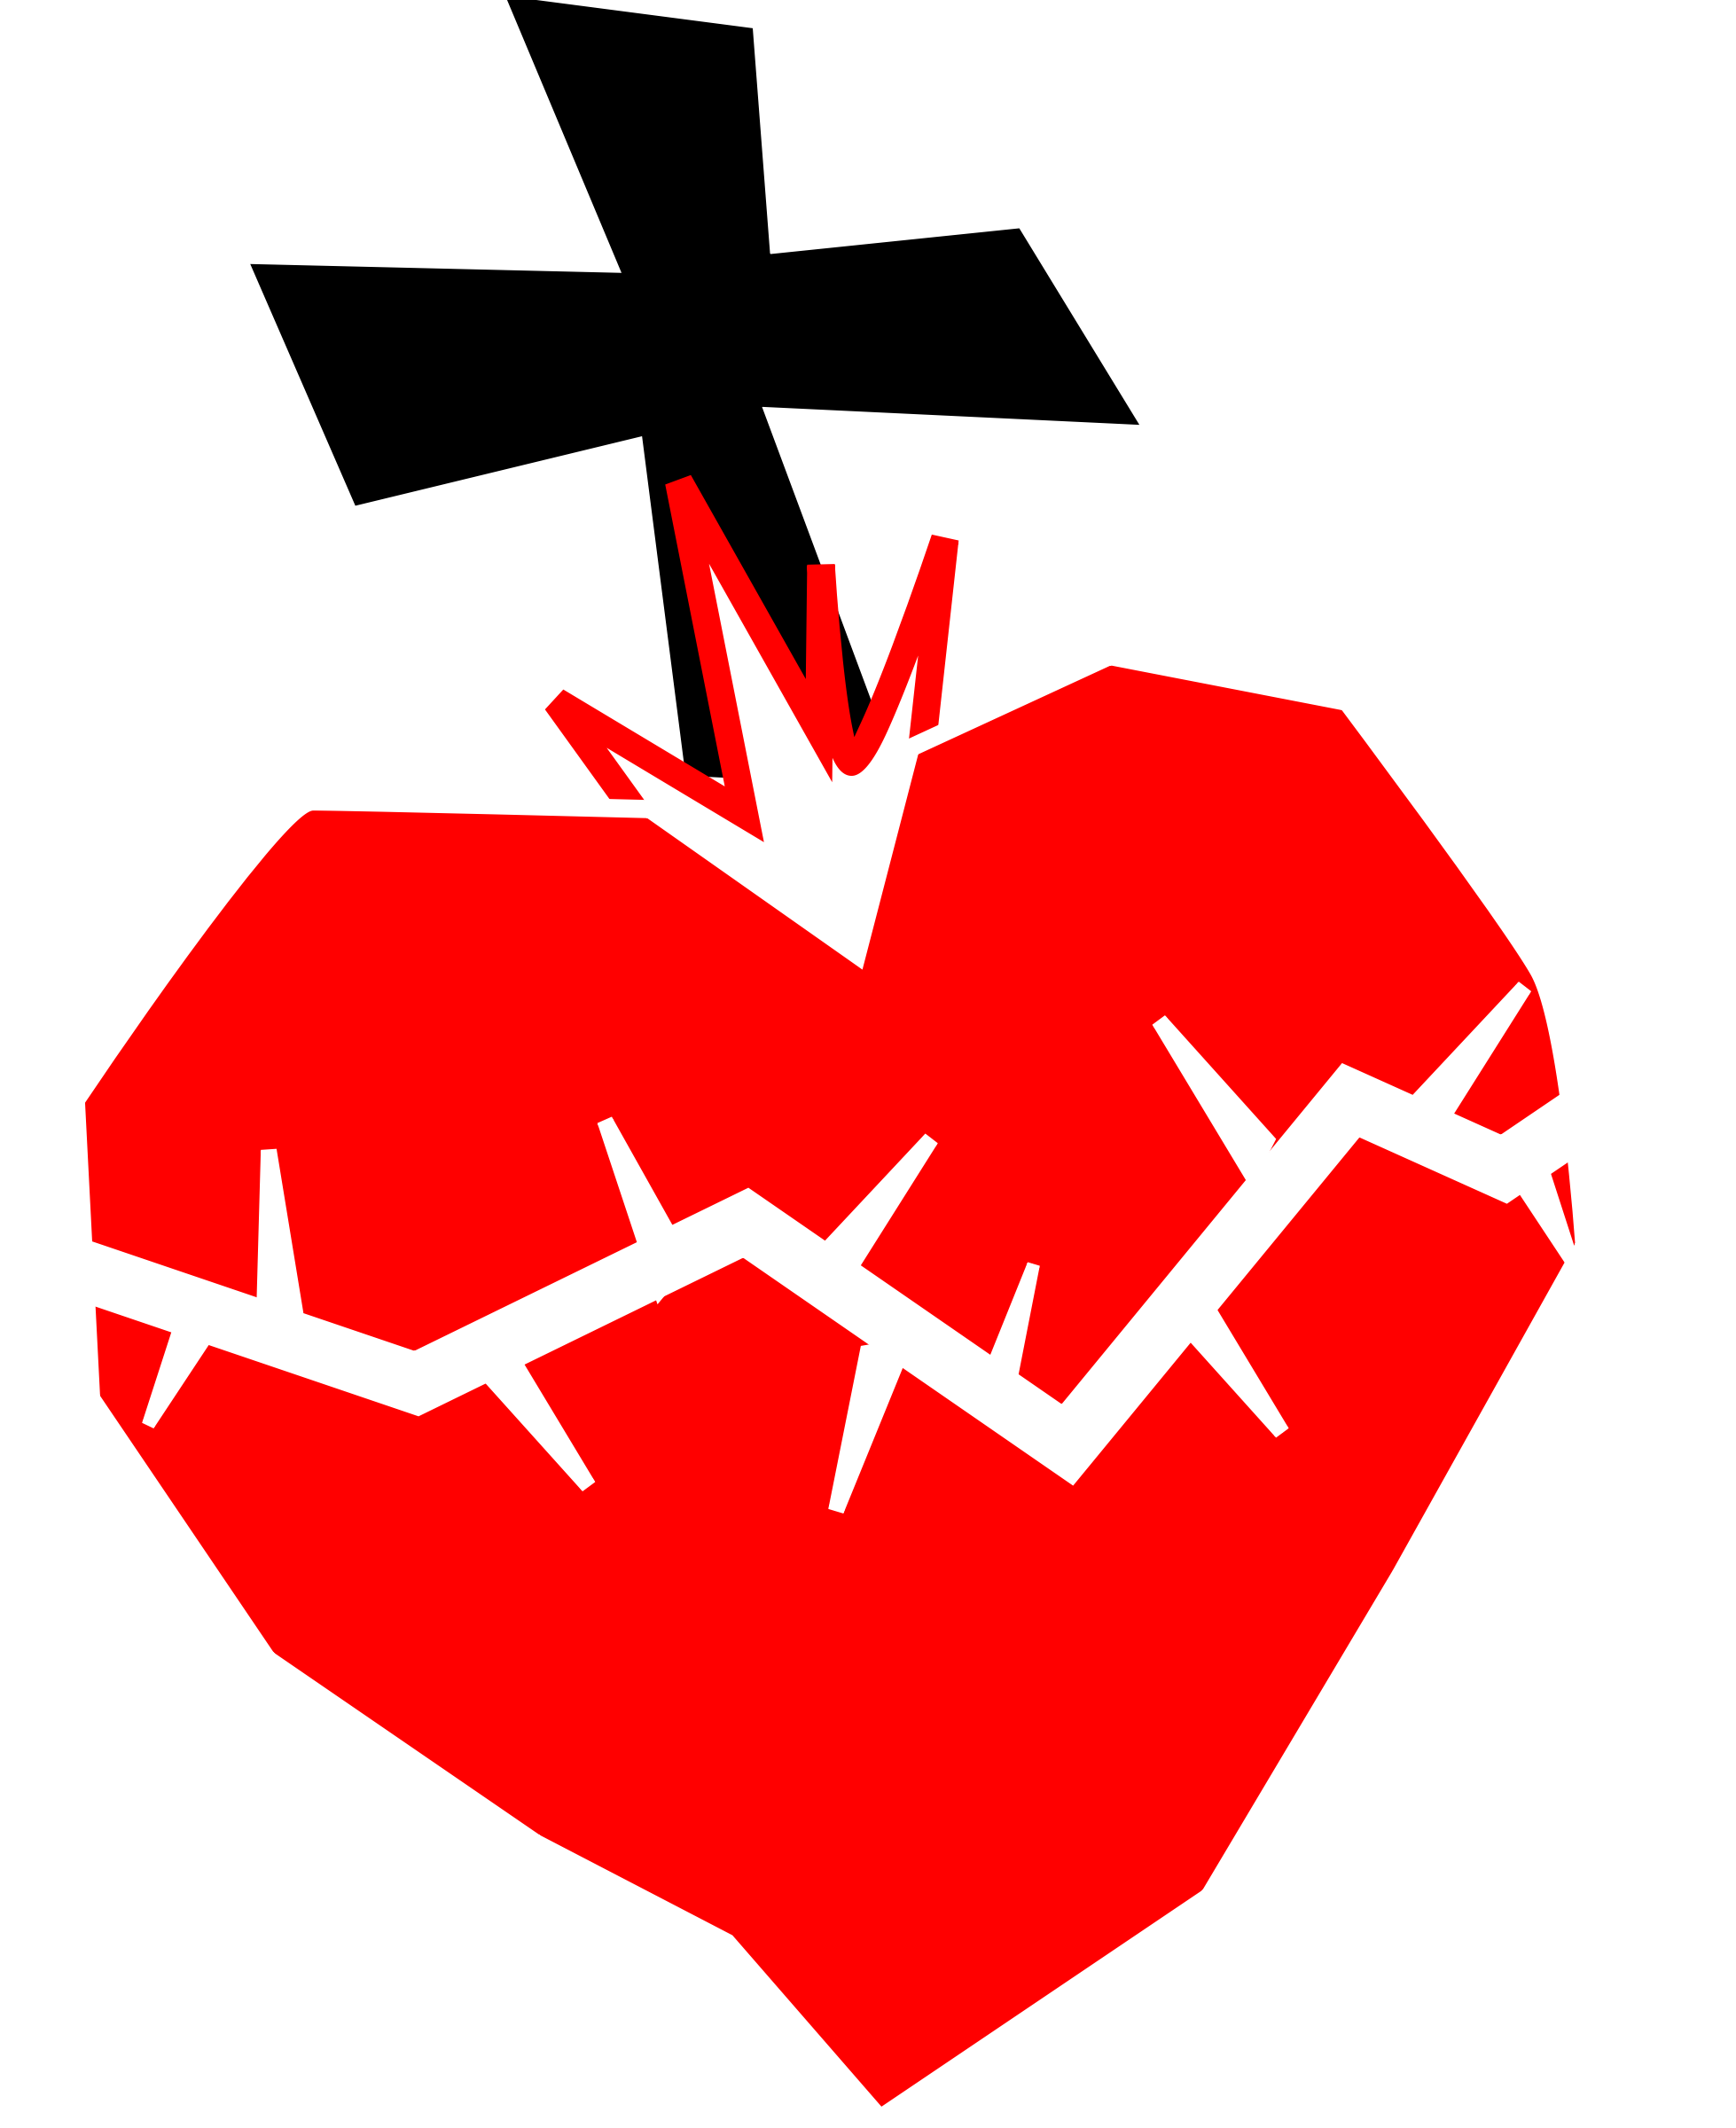 christian heart clip art free - photo #16